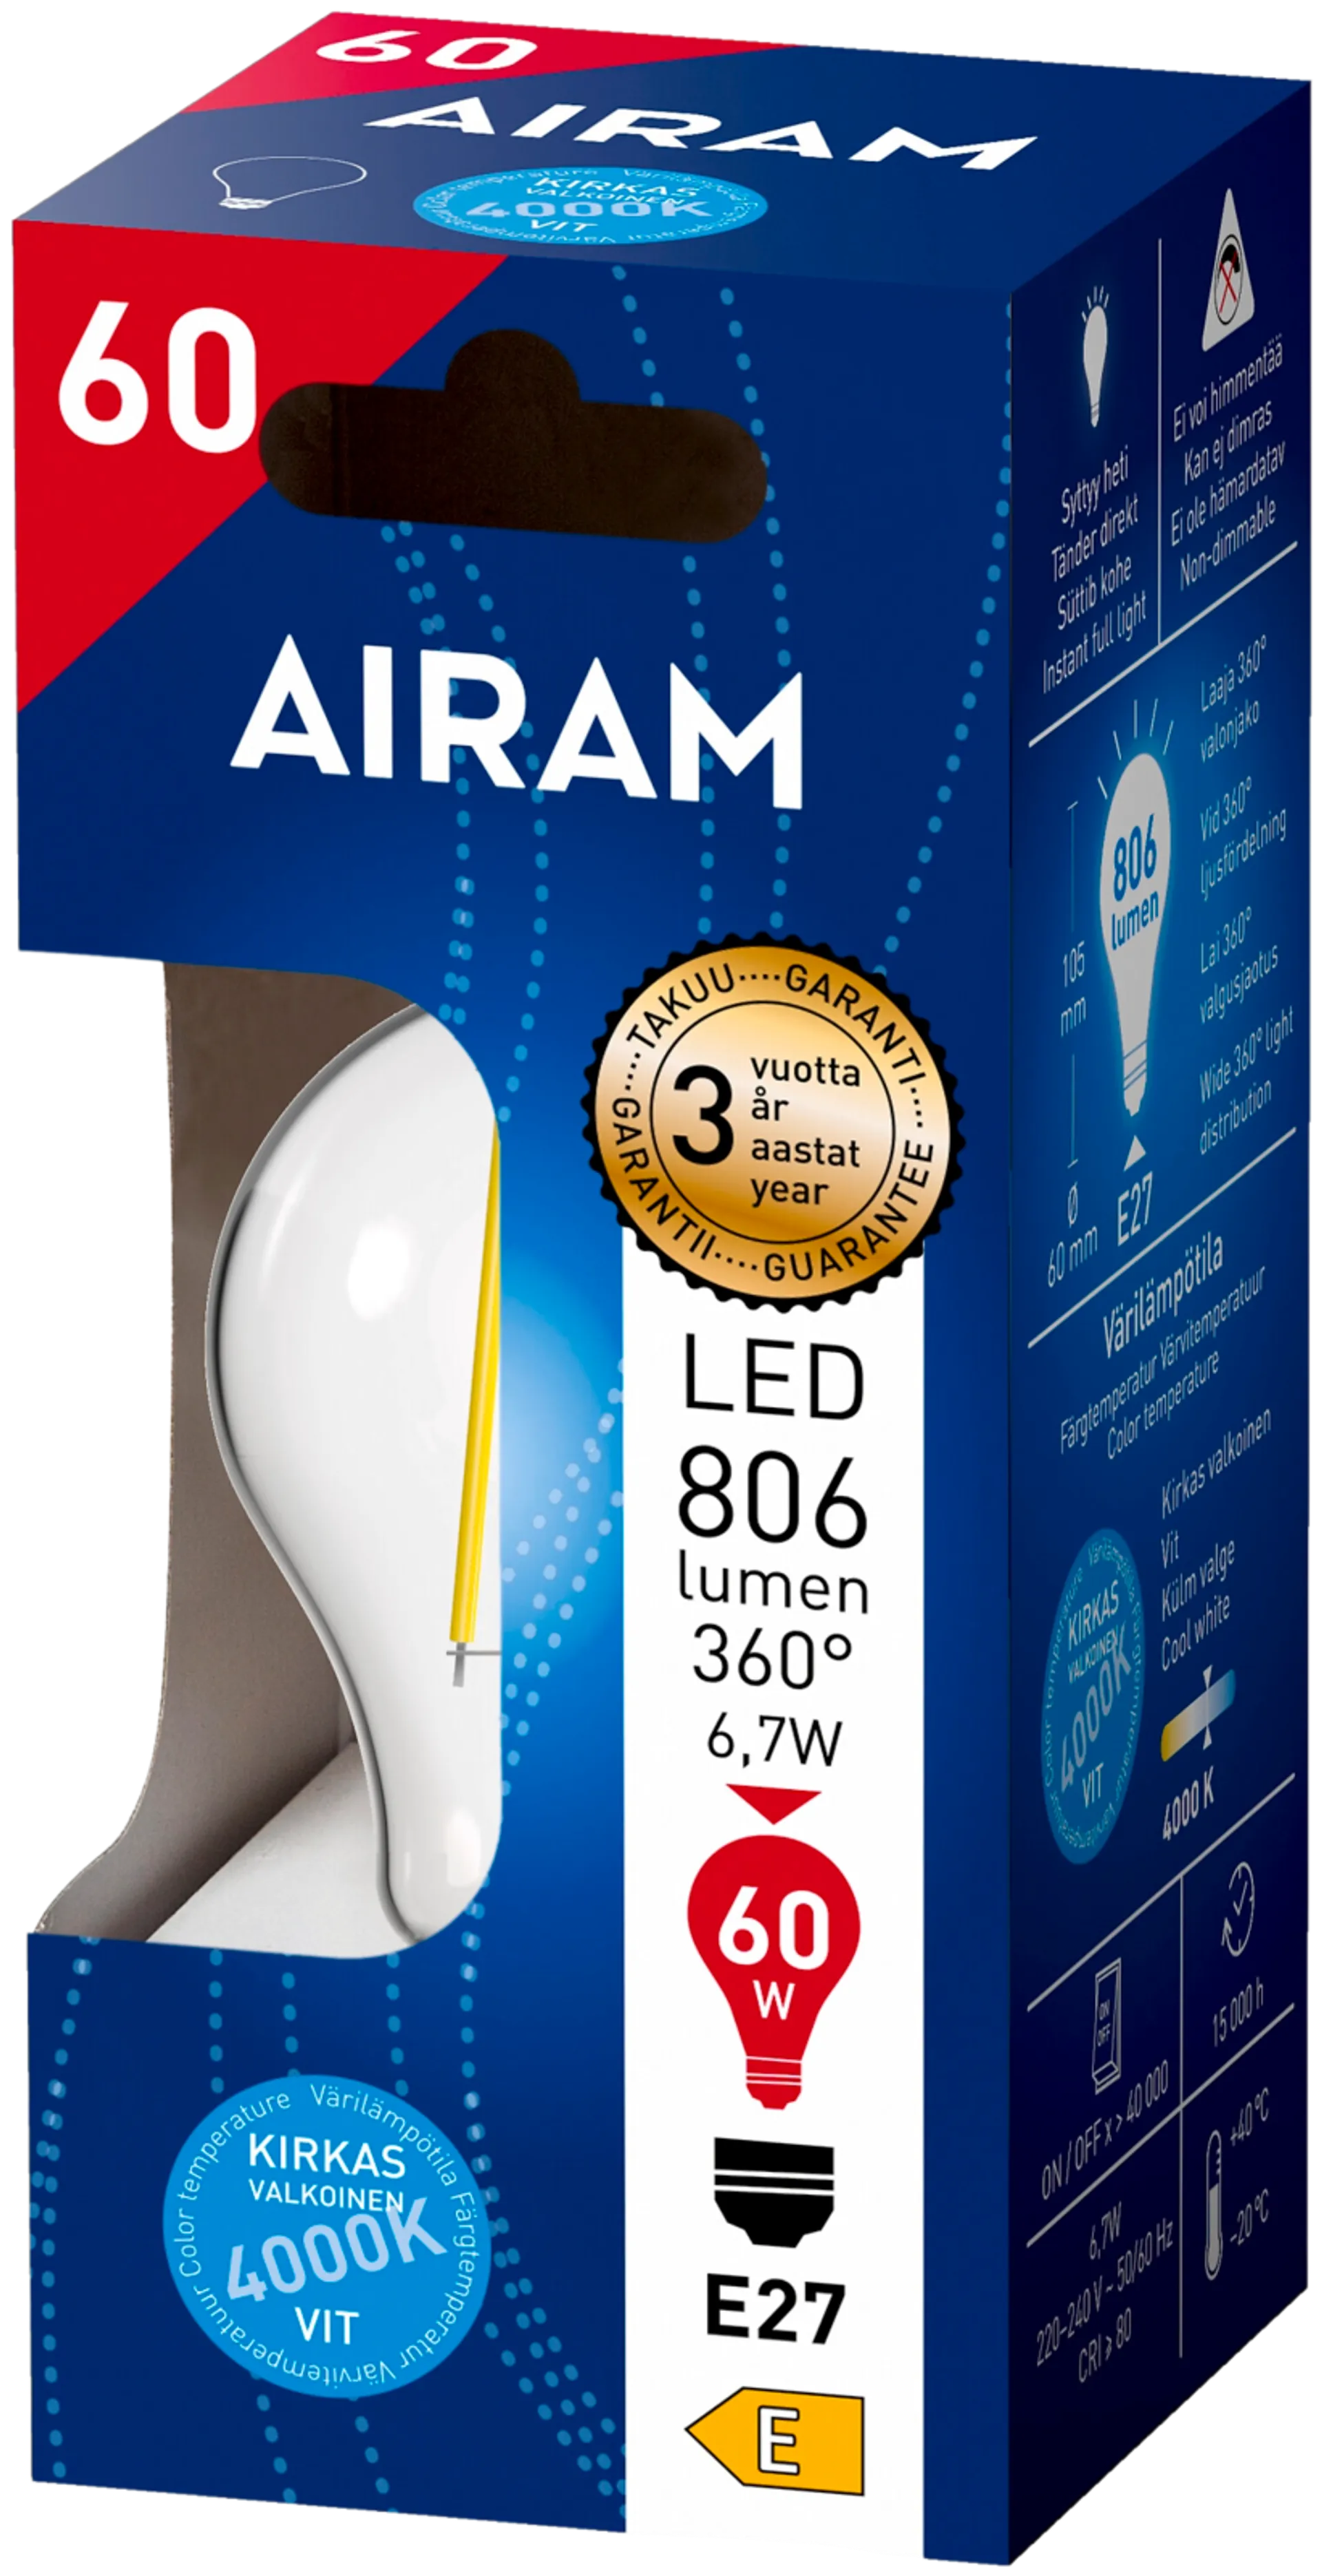 Airam LED Vakio 6,7W 806lm 4000K E27 kirkas - 2